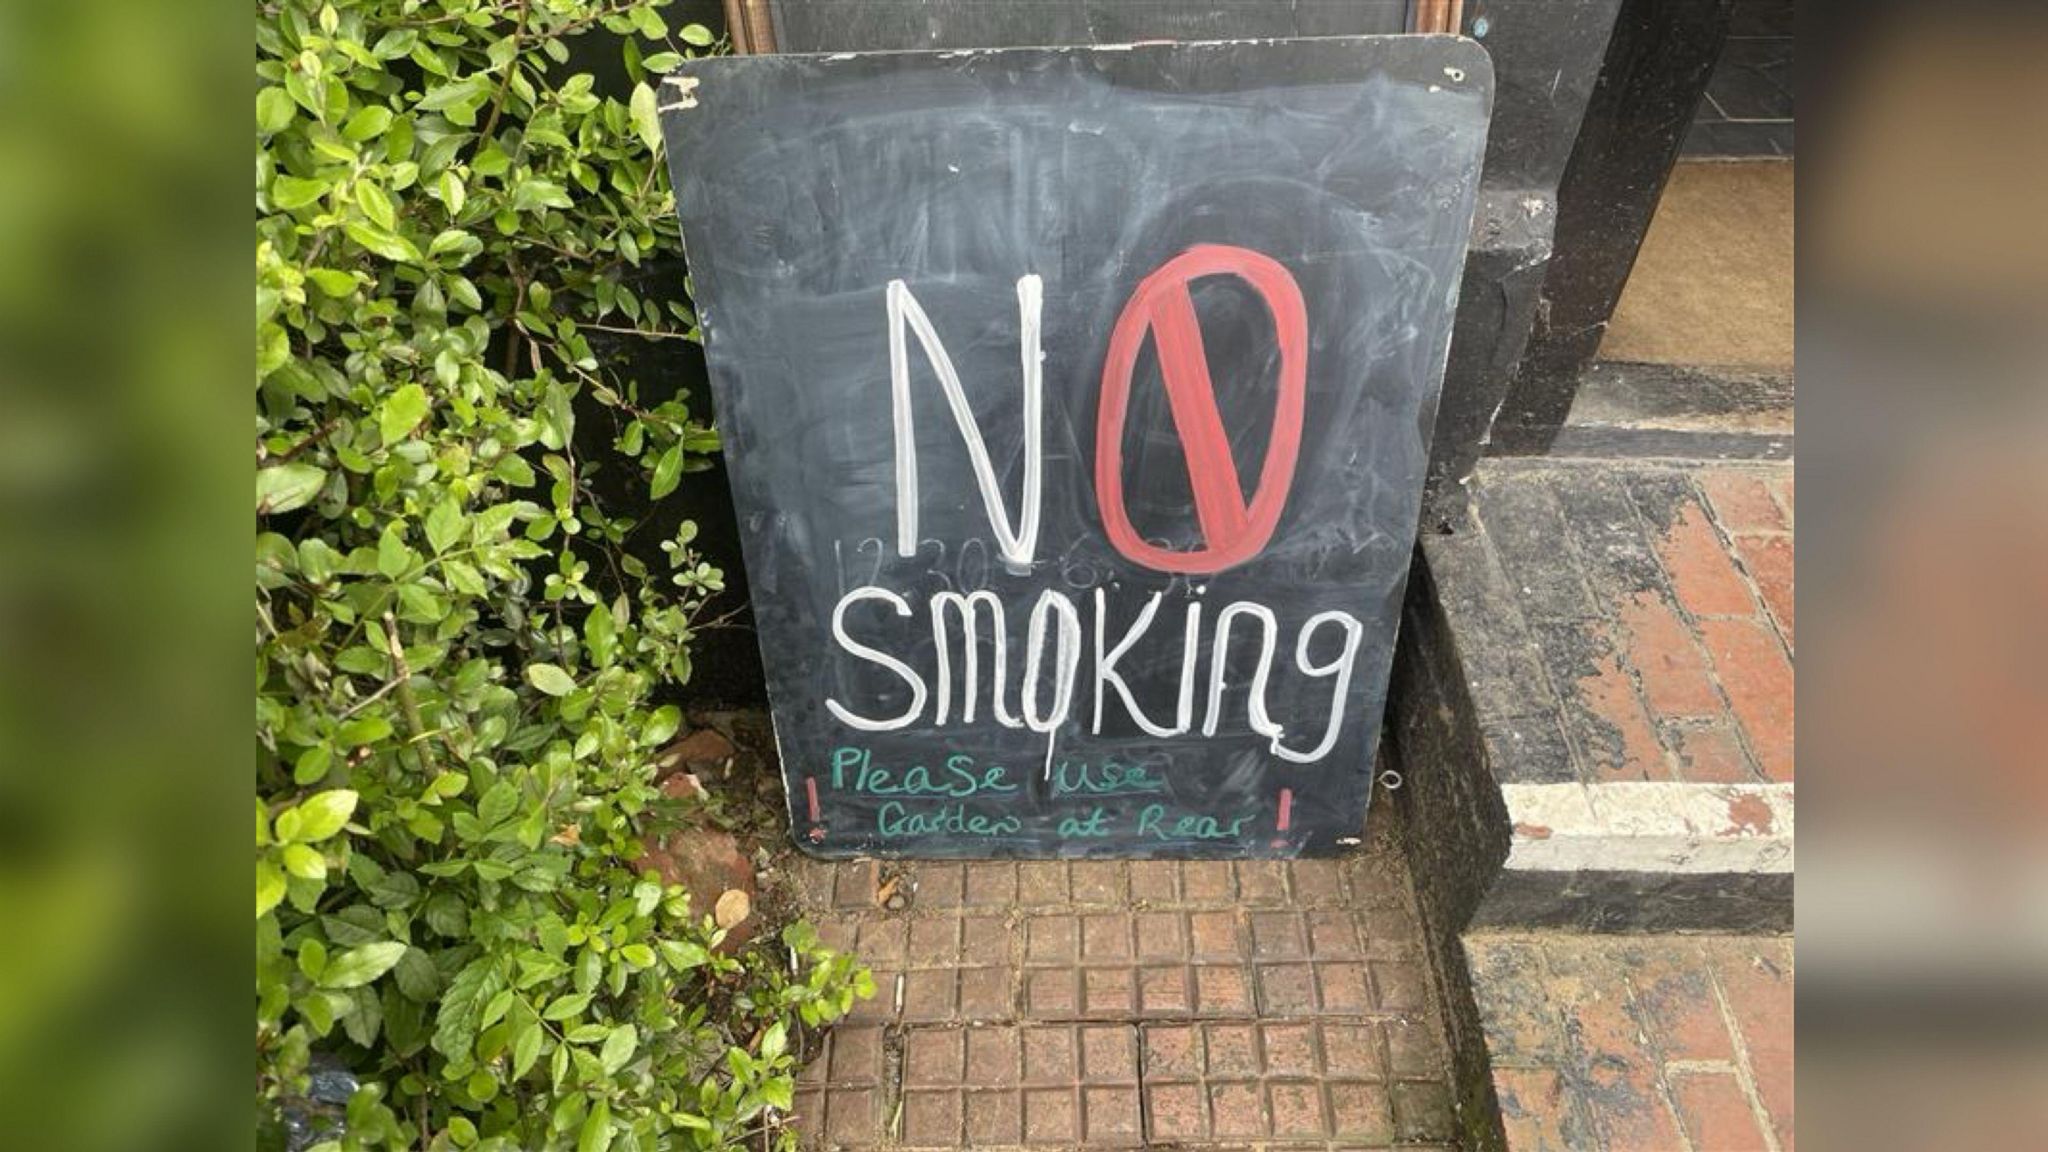 The warning outside The Wheatsheaf pub